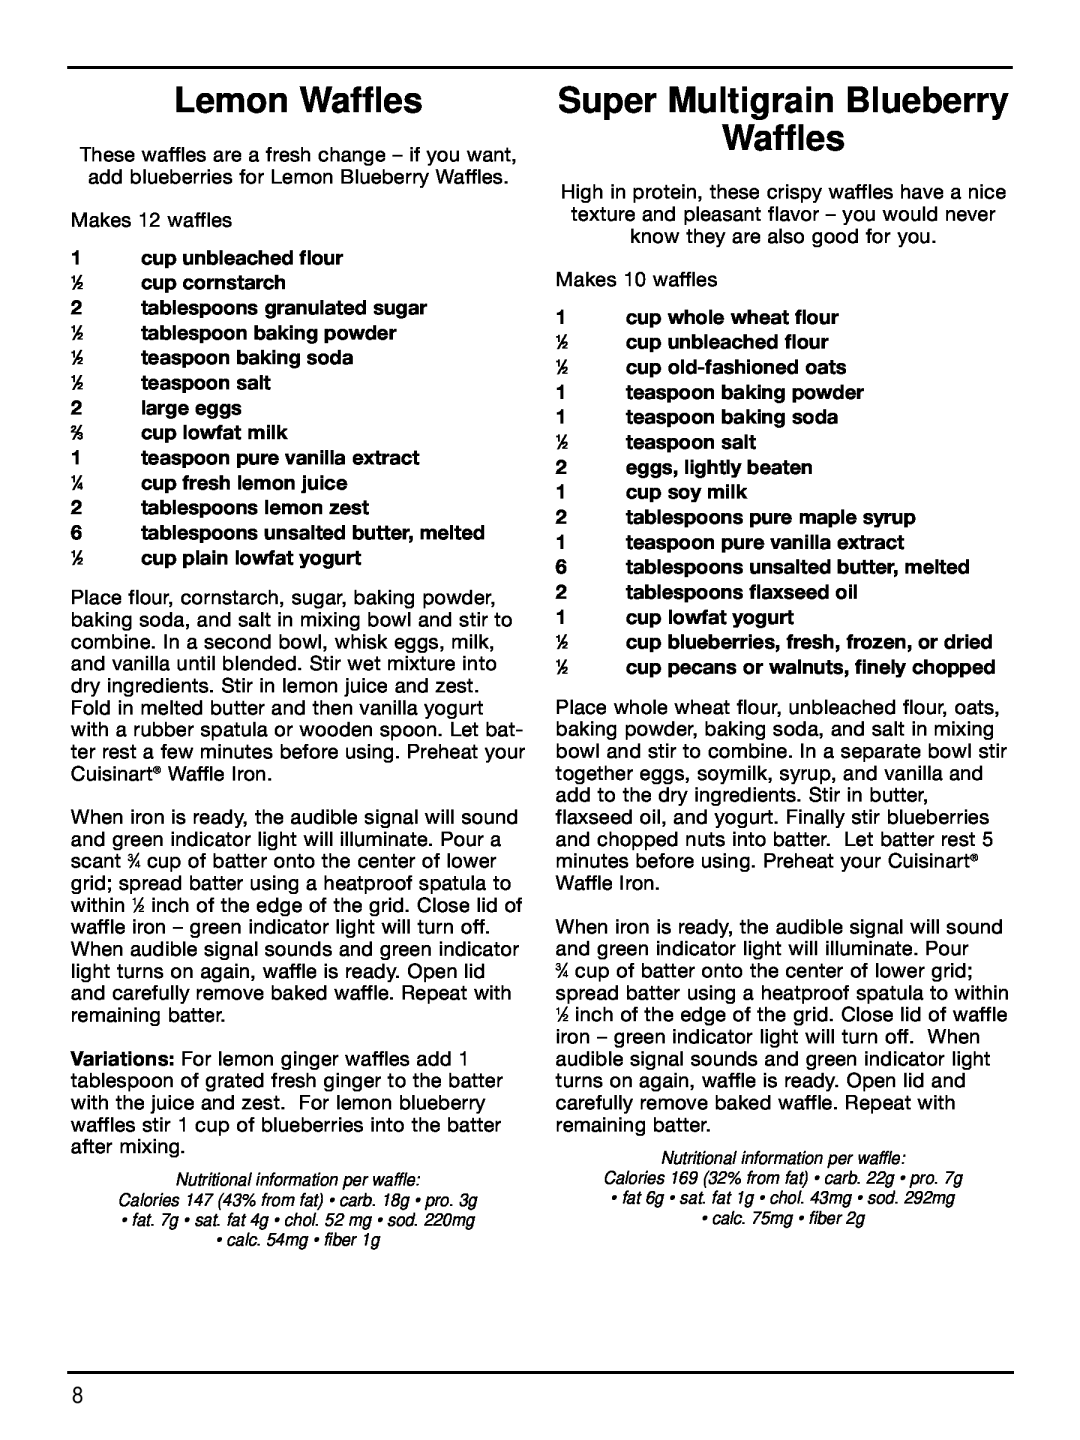 Cuisinart WAF-2B manual Lemon Waffles, Super Multigrain Blueberry Waffles 